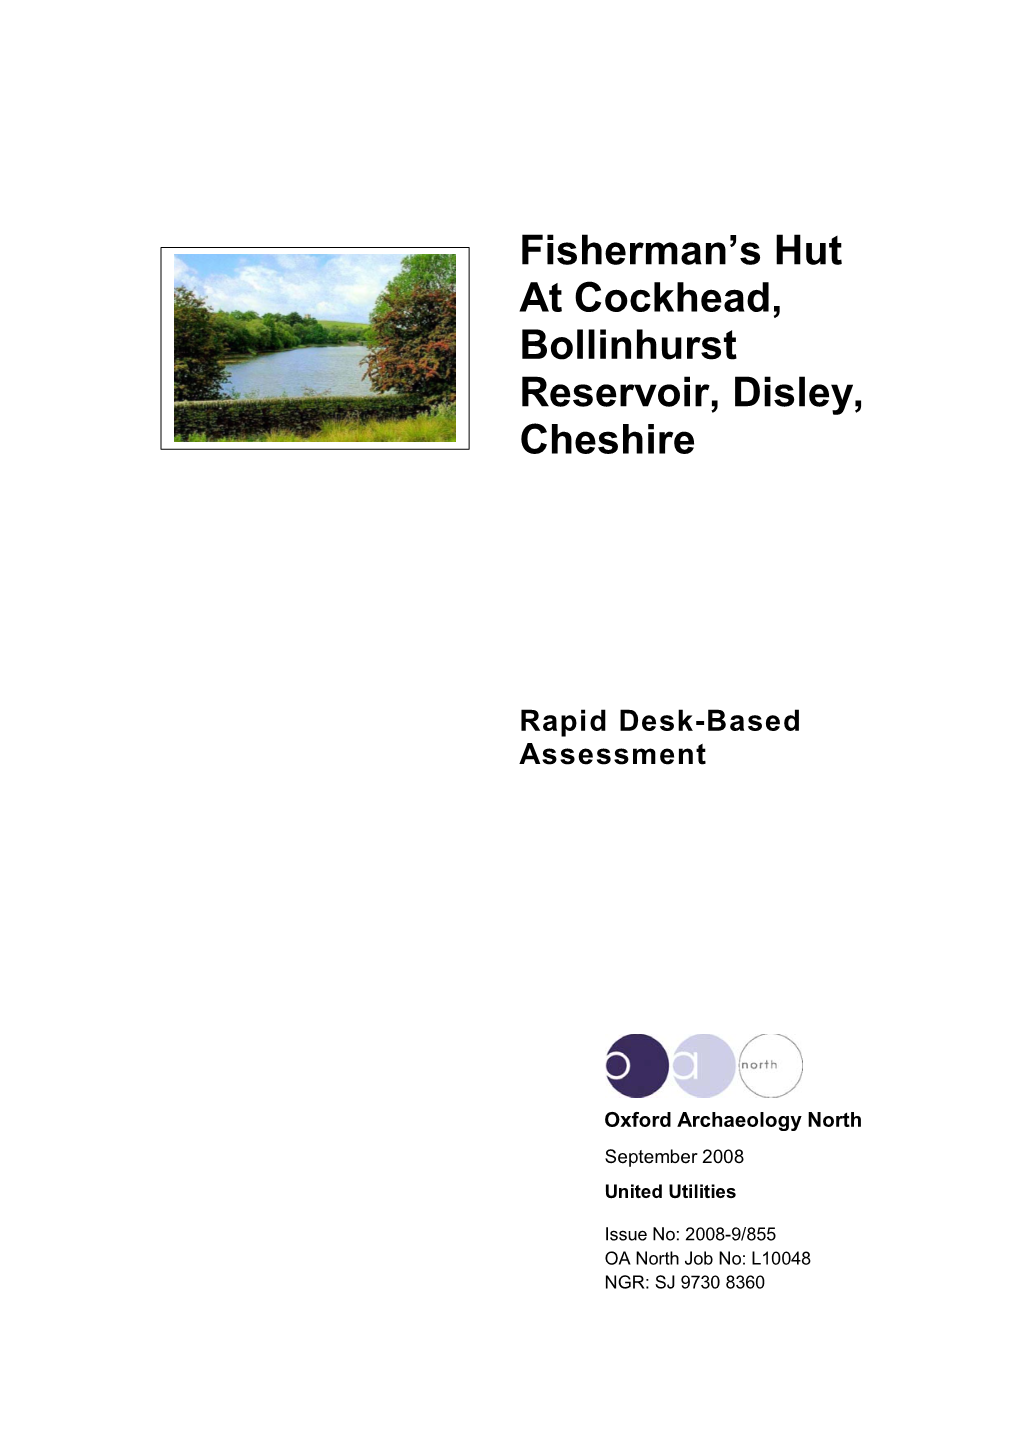 Fisherman's Hut at Cockhead, Bollinhurst Reservoir, Disley